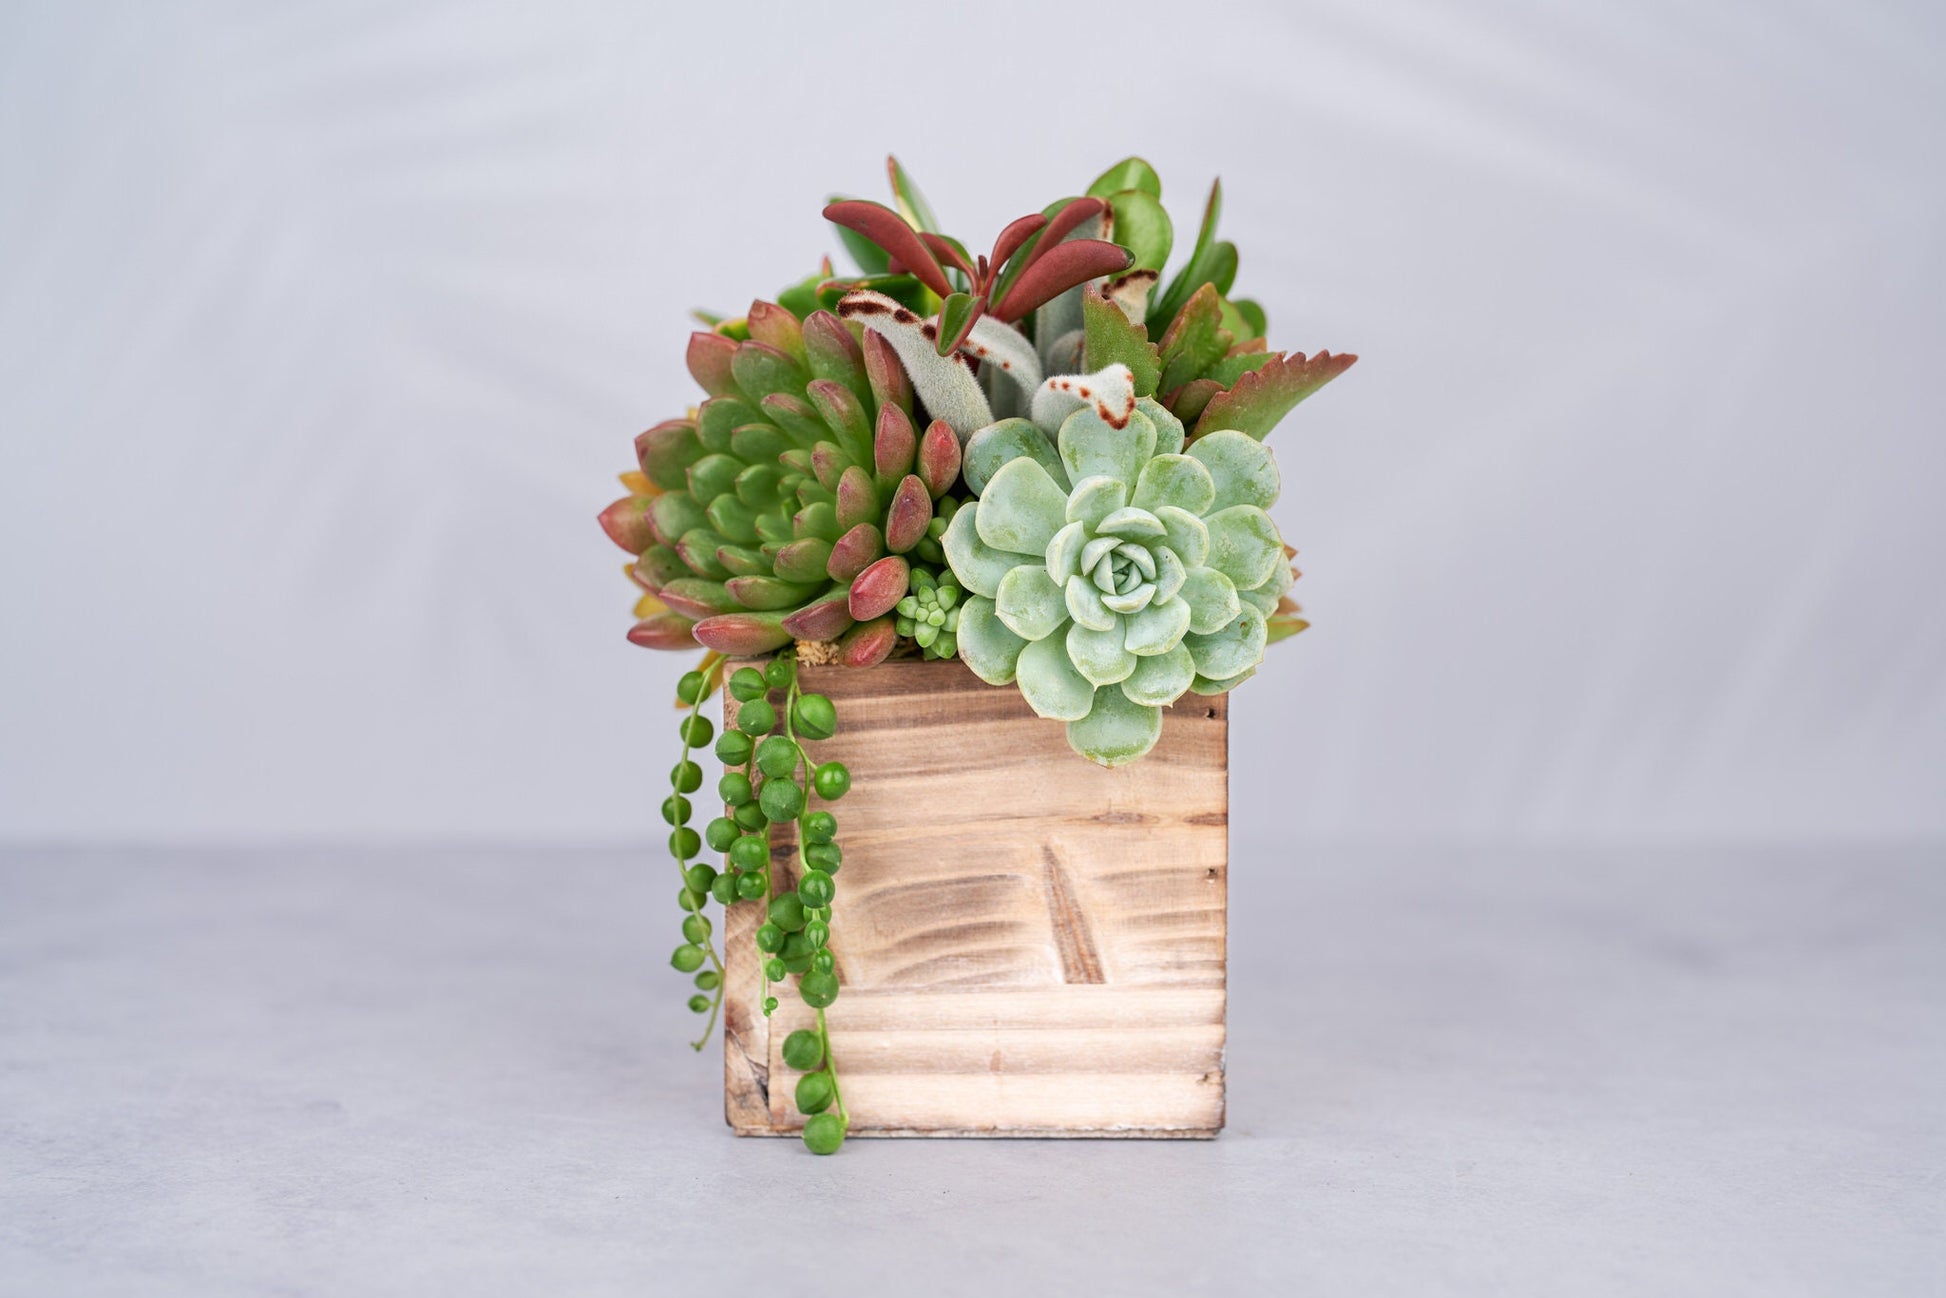 Small Wood Rustic Succulent Arrangement Planter: Living Succulent Gift or Centerpiece for Weddings & Events